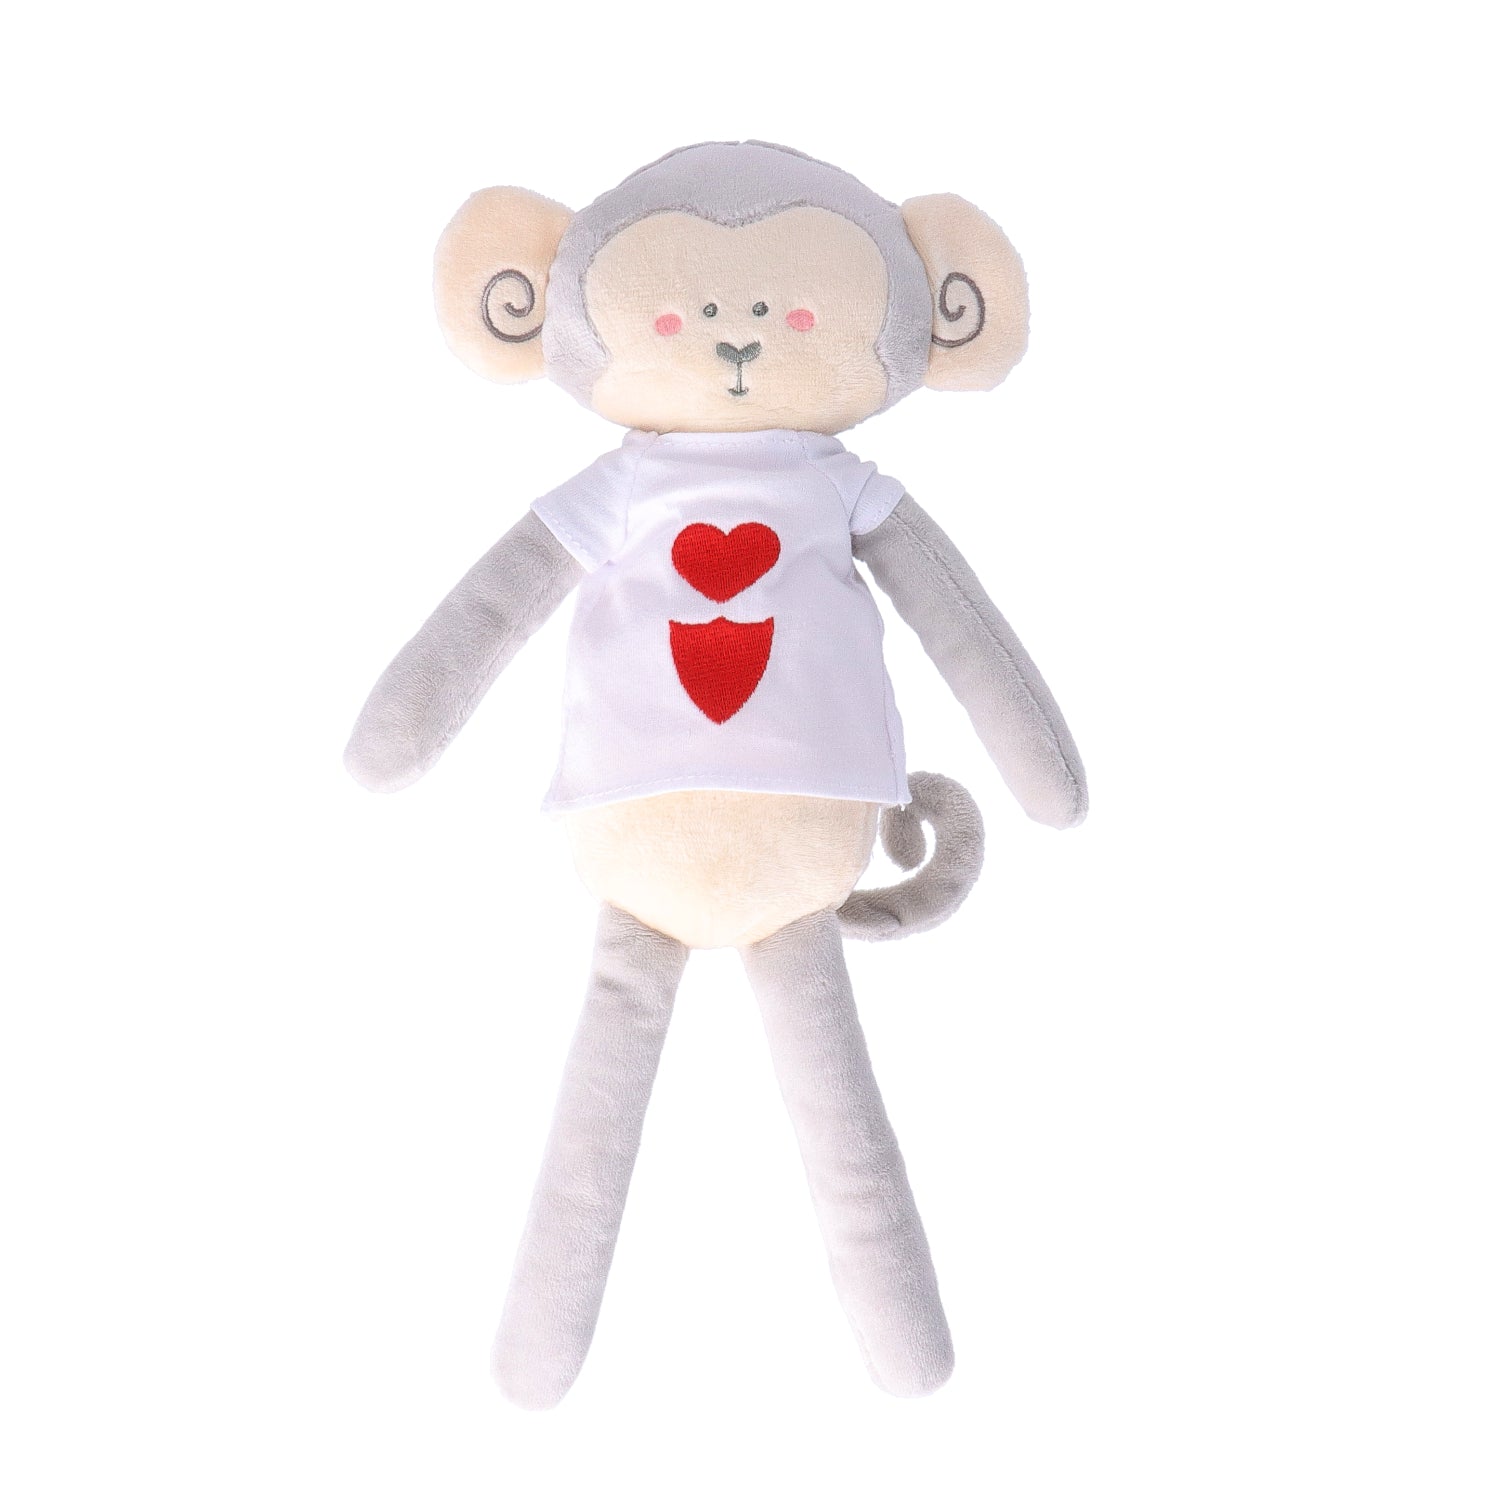 Grey stuffed monkey for babies